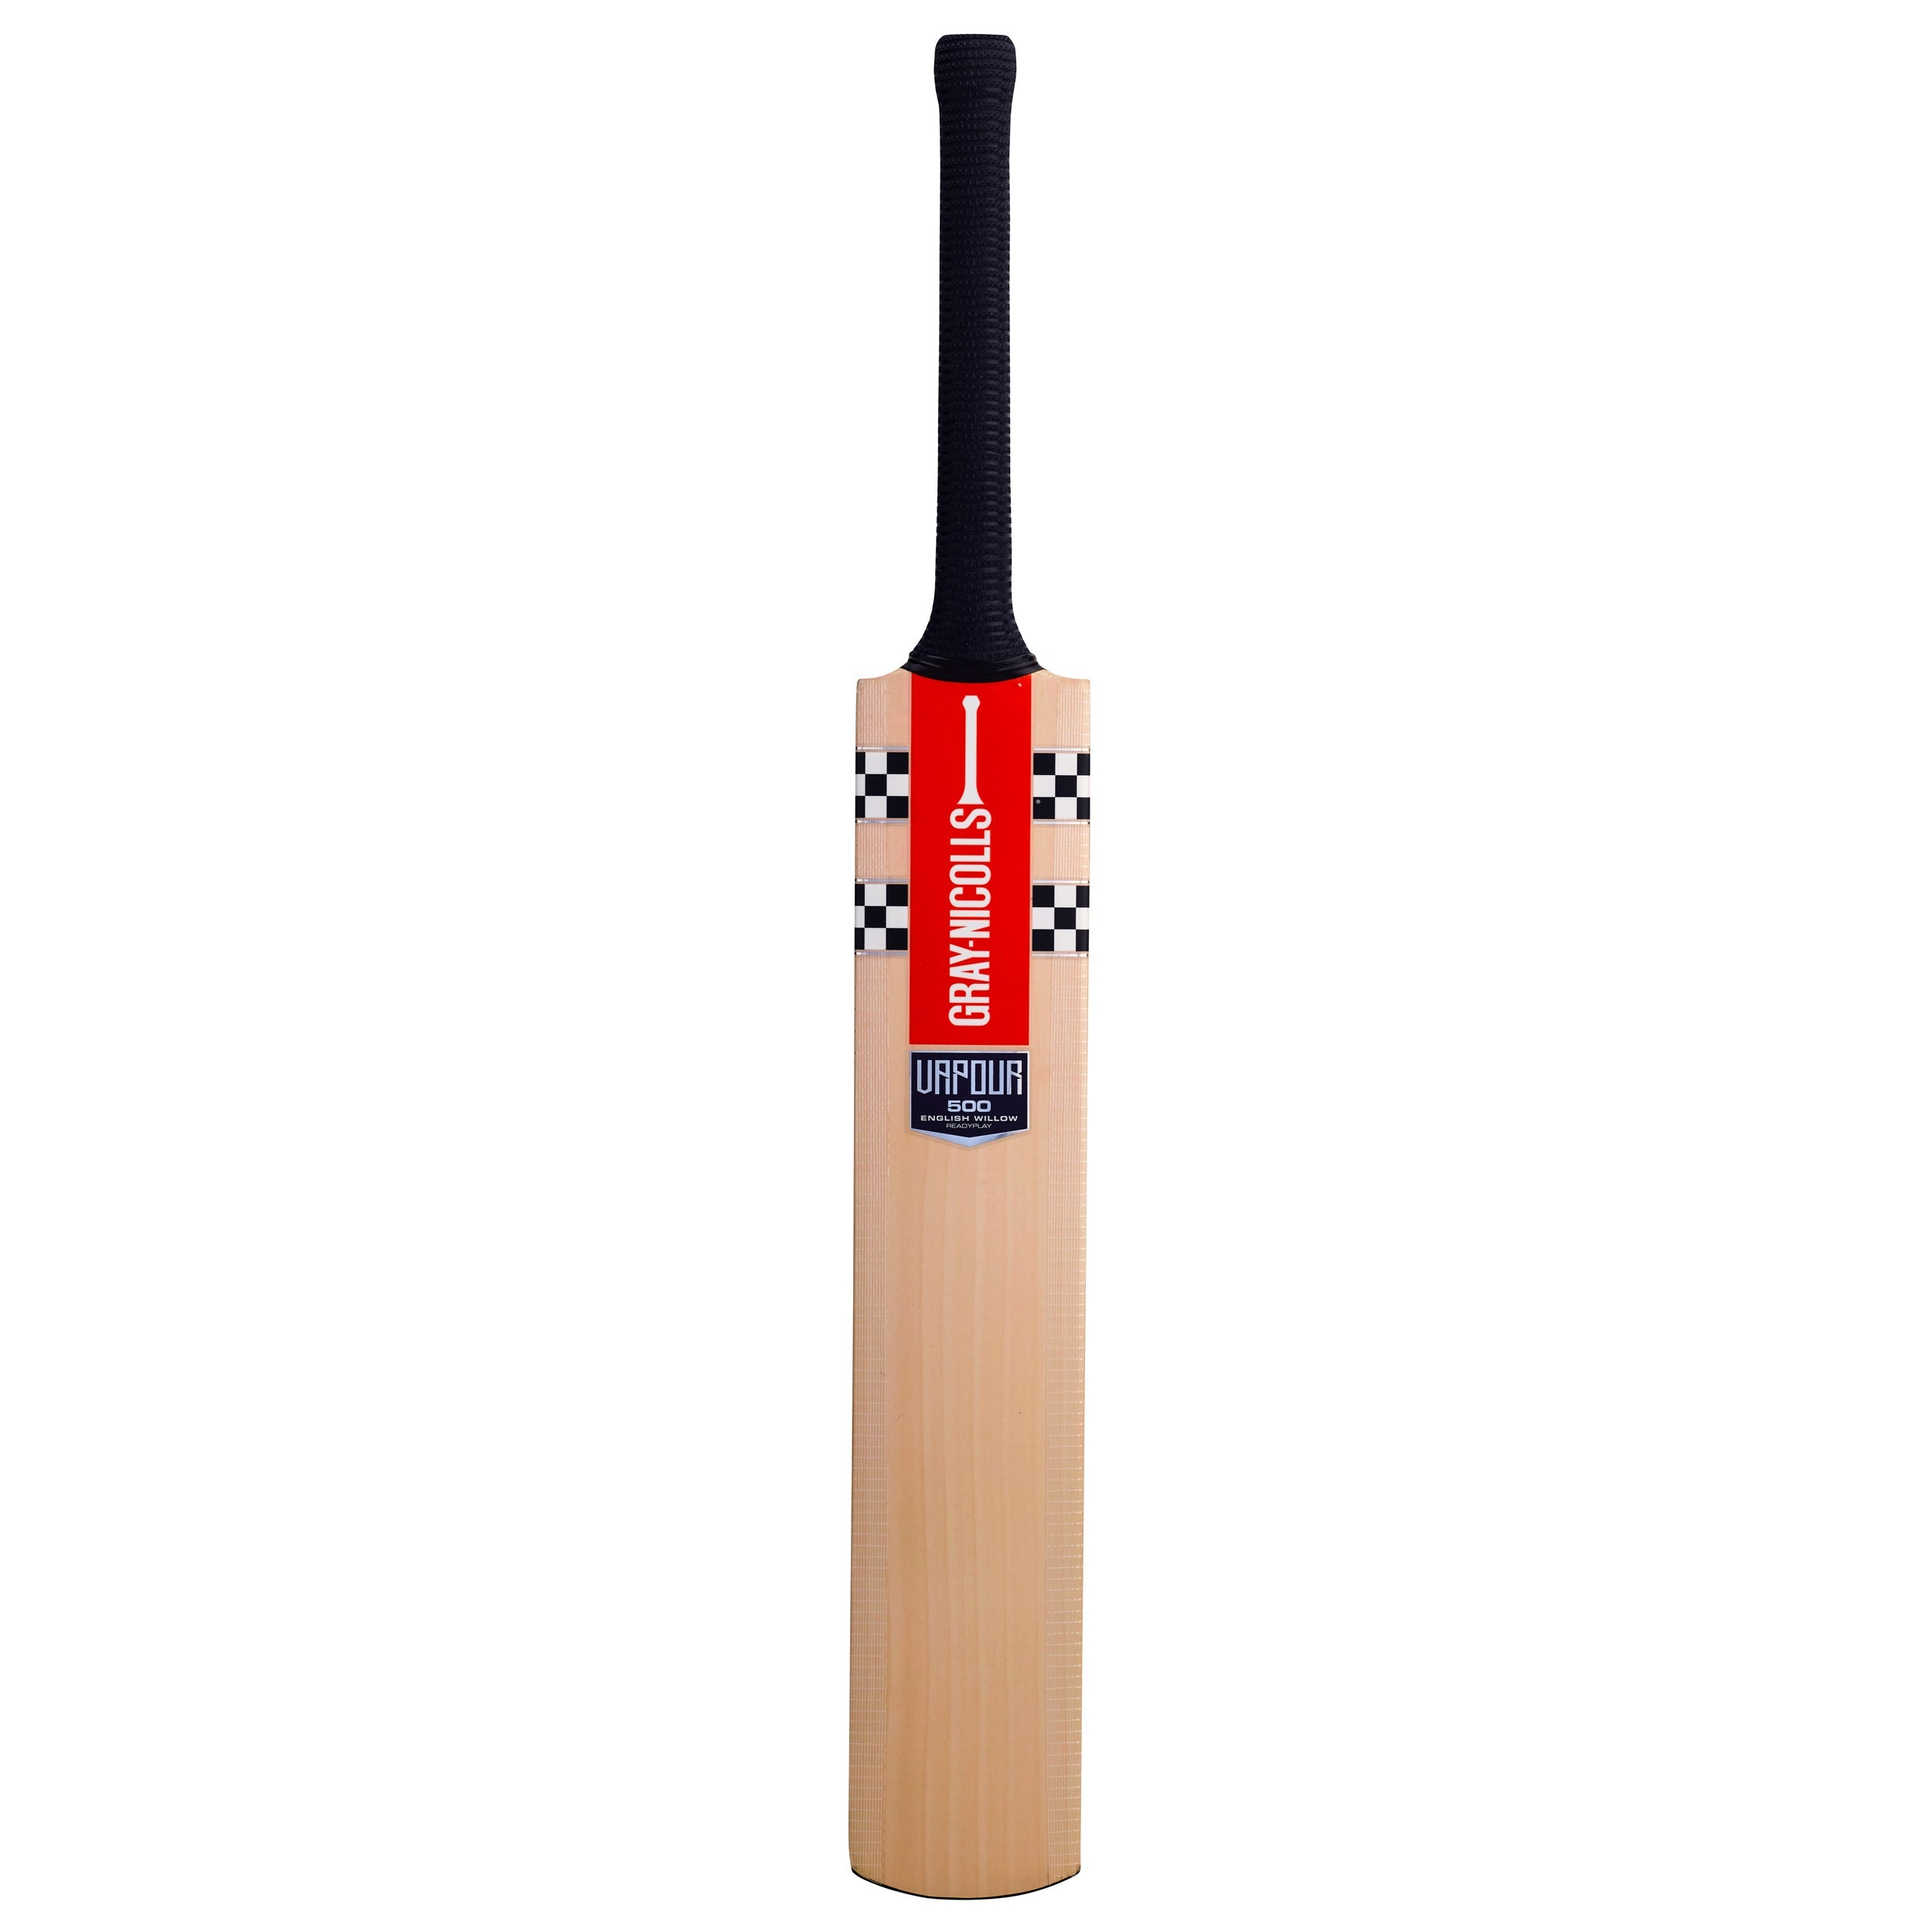 Gray Nicolls Vapour 500 Short Blade Cricket Bat